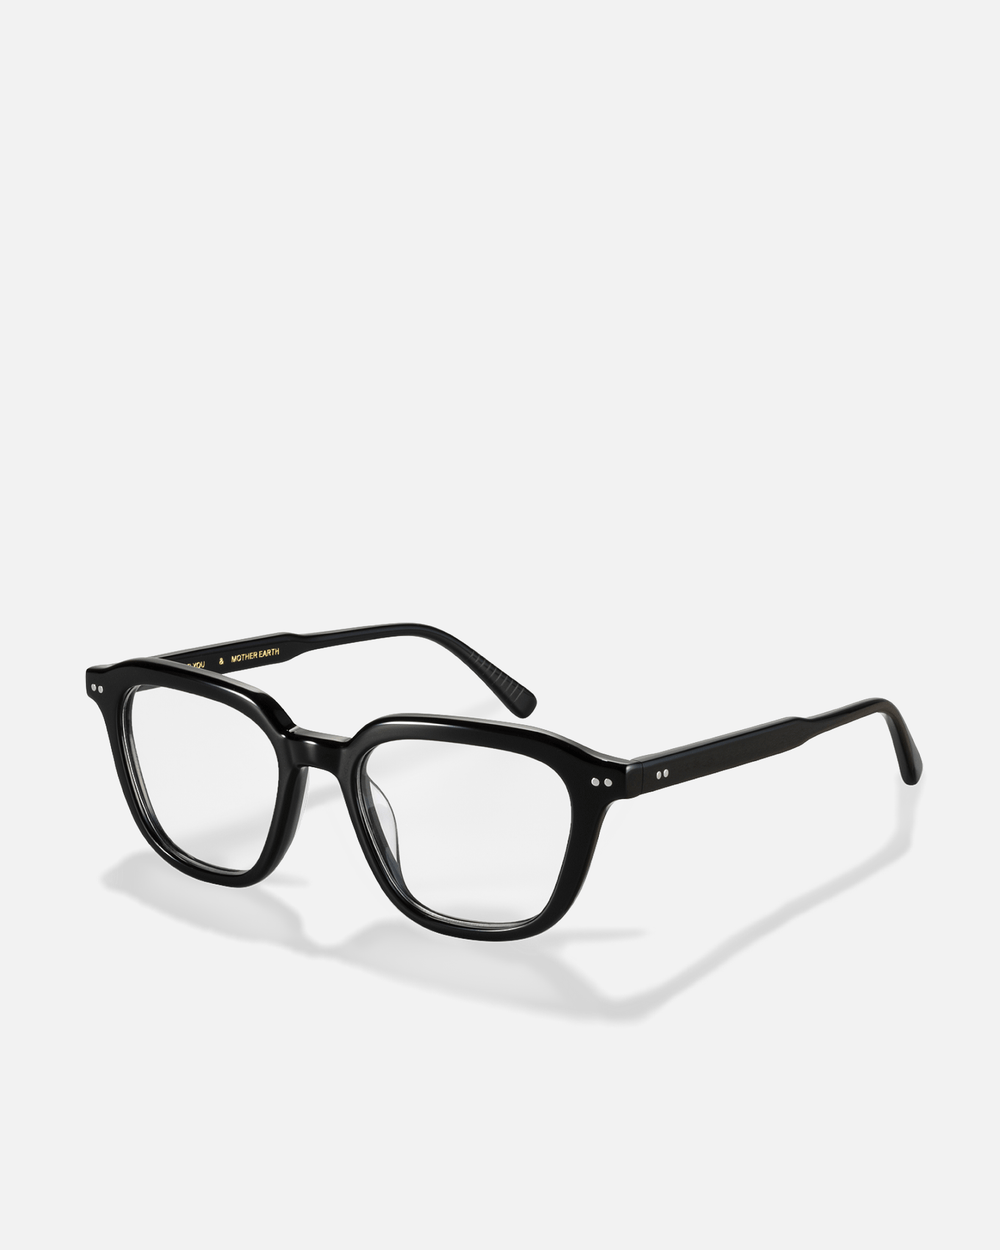 YUZU Bio-Acetate Wayfarer Frame Glasses for Men & Women | Black | Optical Collection | OLLU